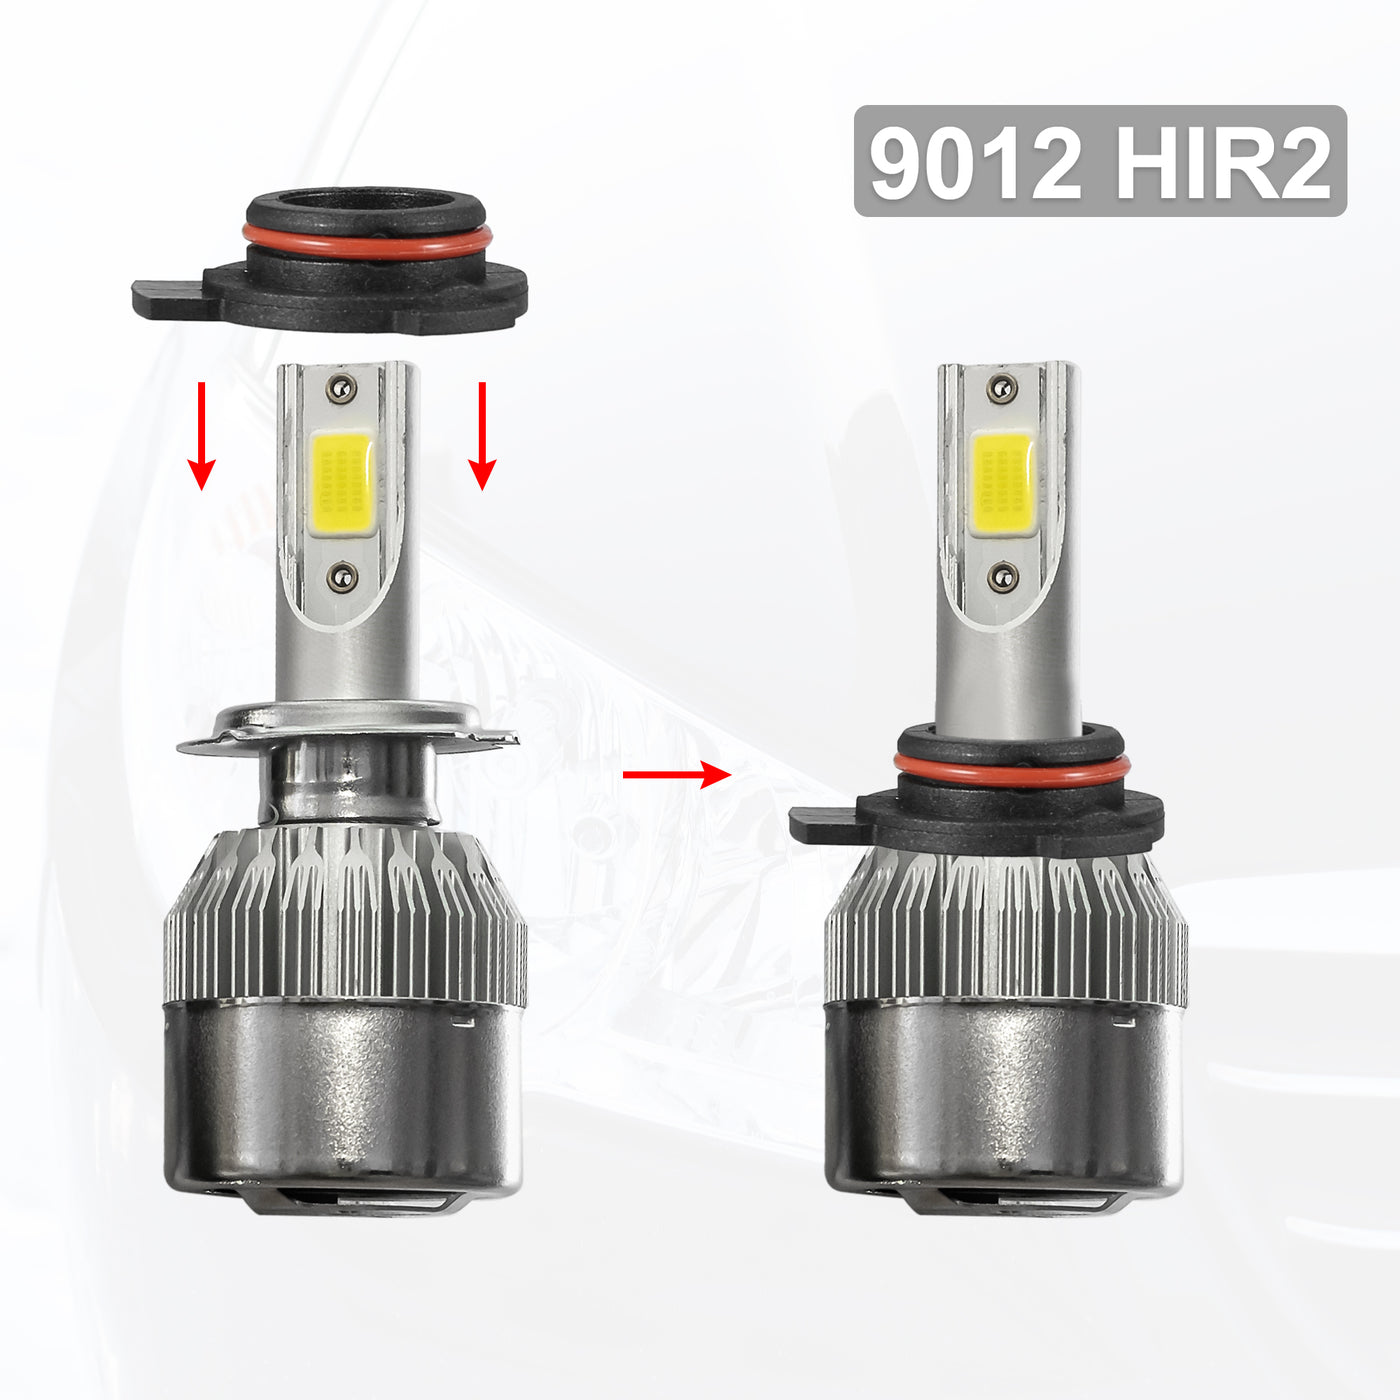 X AUTOHAUX 2pcs 9012 HIR2 LED Headlight Adapter Base Bulb Sockets Retainer Holder Universal for Car Black